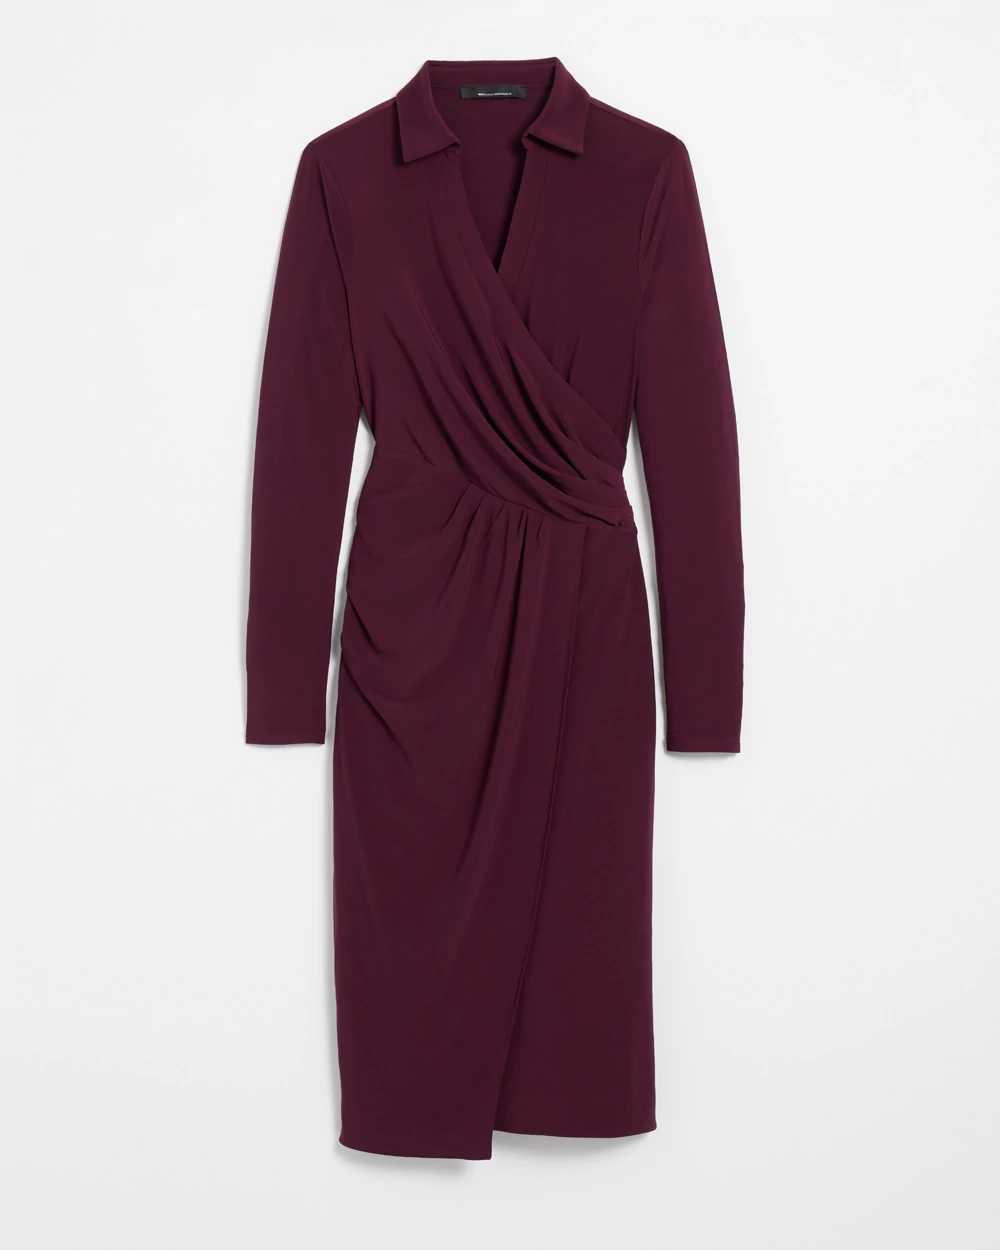 Petite Long Sleeve Matte Jersey Faux Wrap Midi Dress click to view larger image.